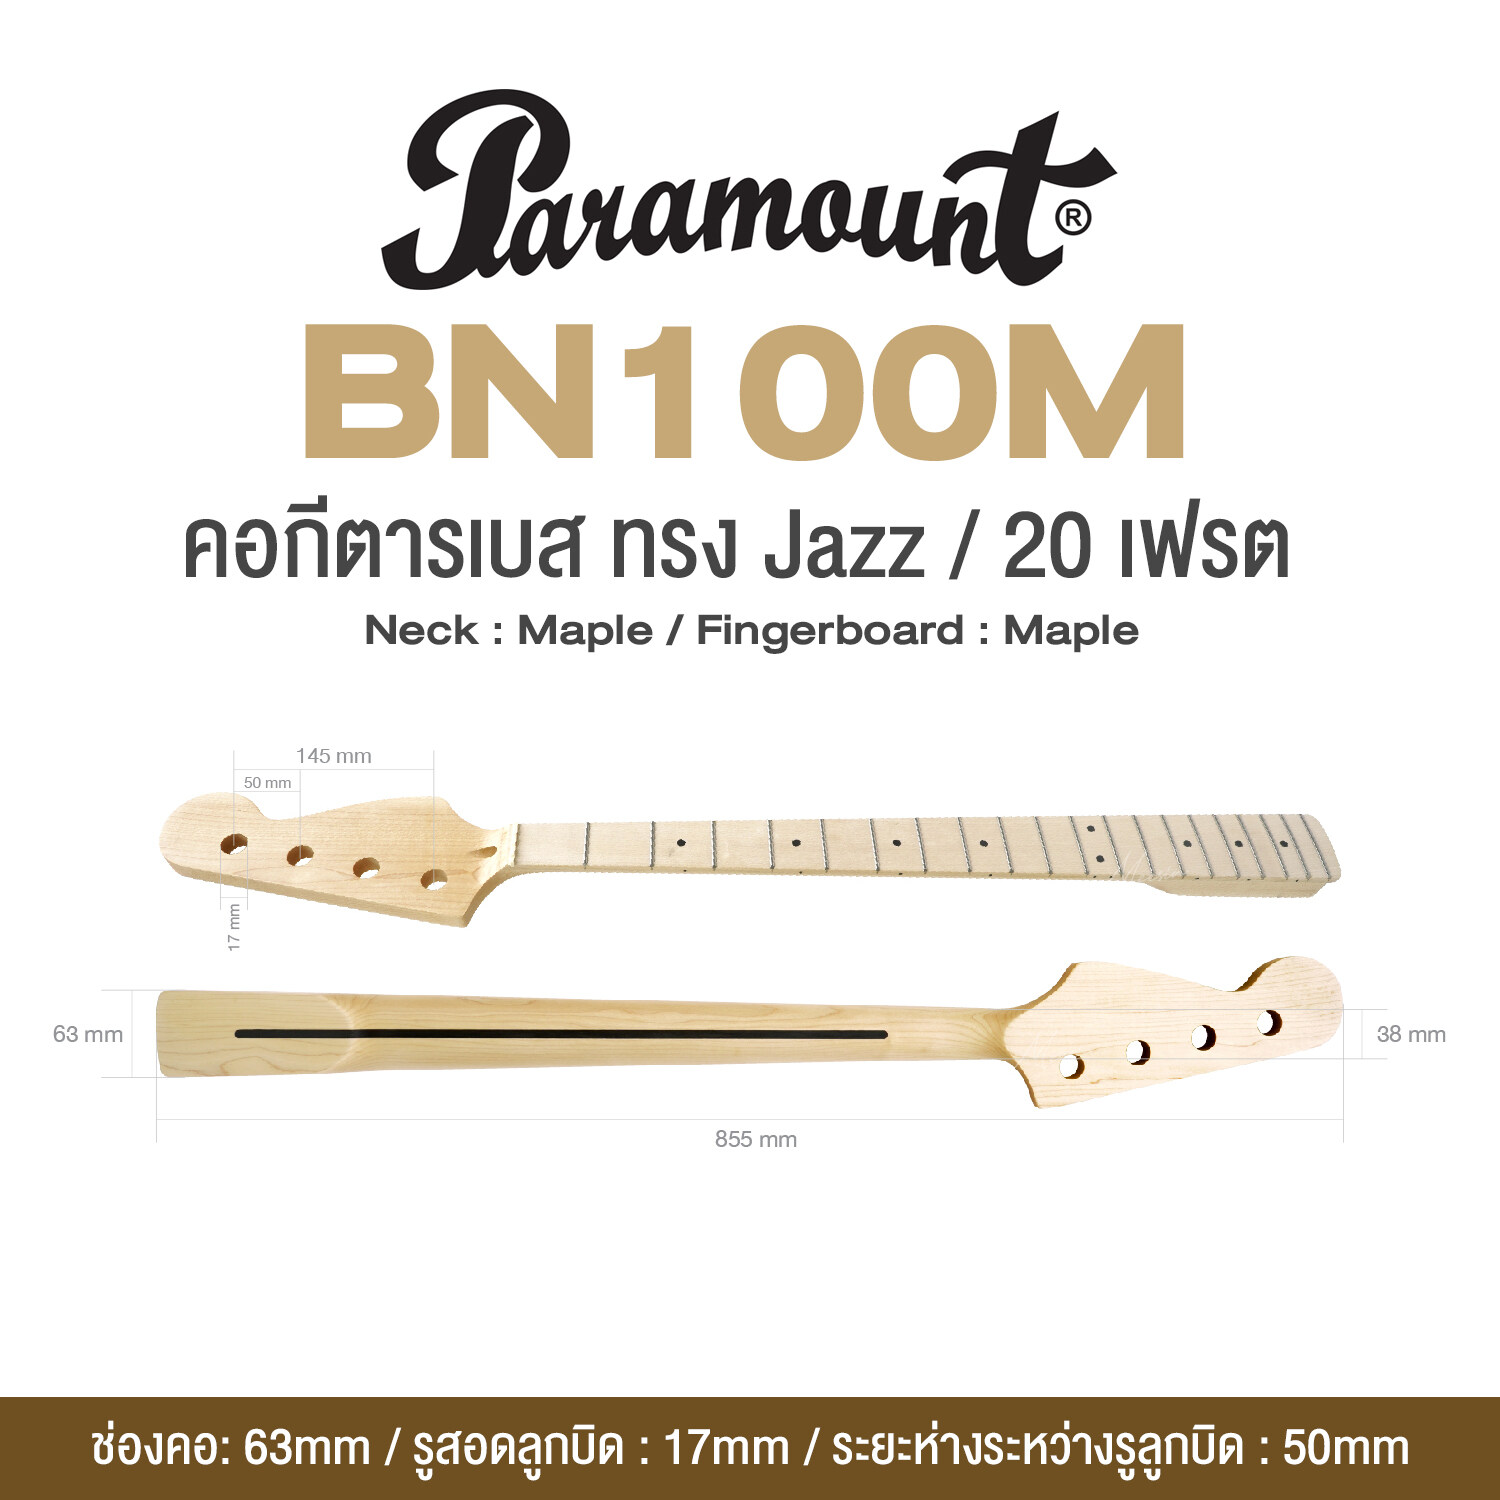 Paramount BN100M